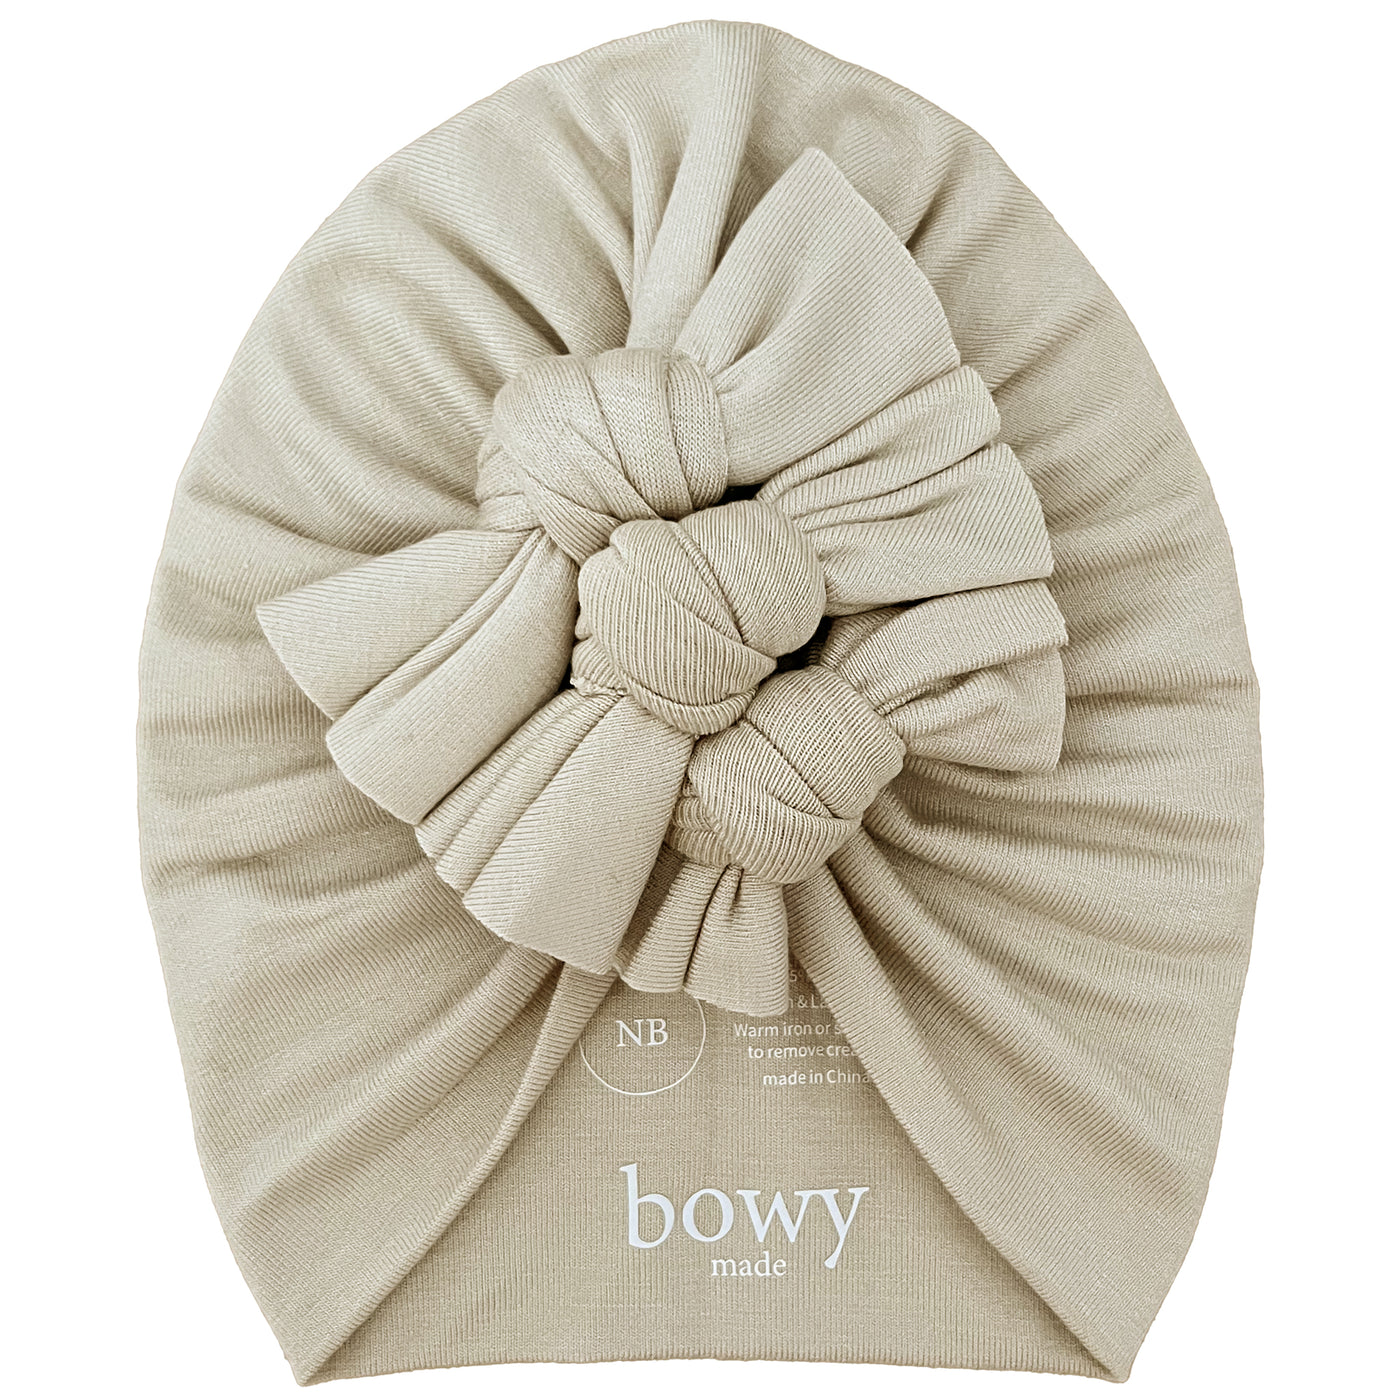 Bowy Baby Turban - Mist